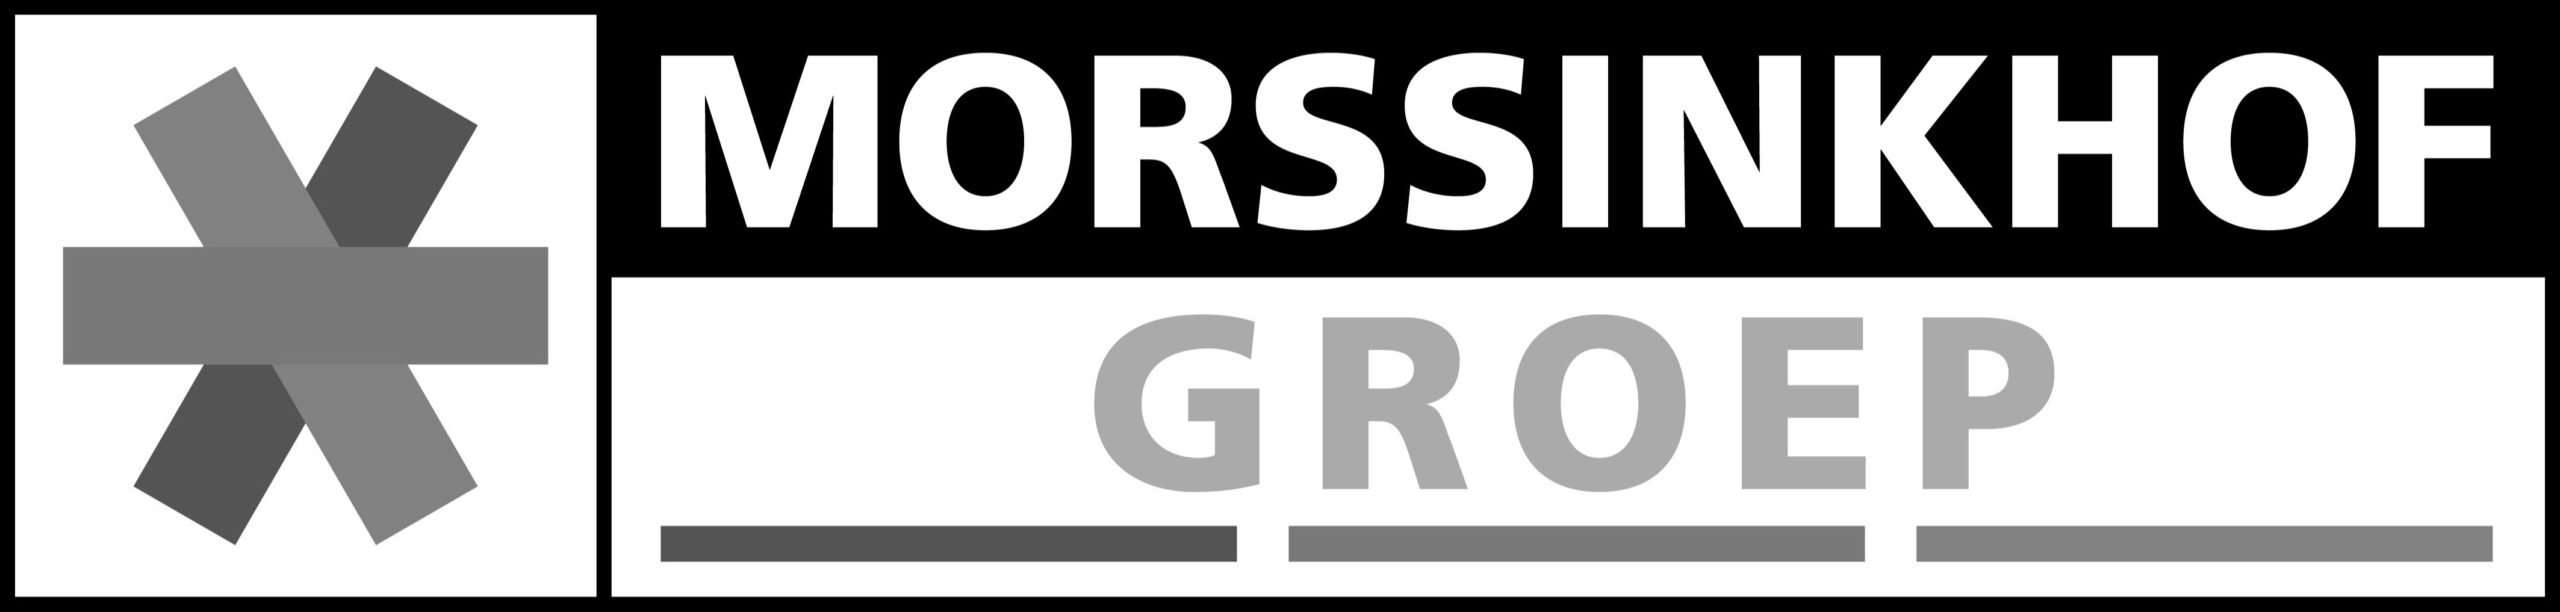 Morssinkhof-Groep-logo-C-modified